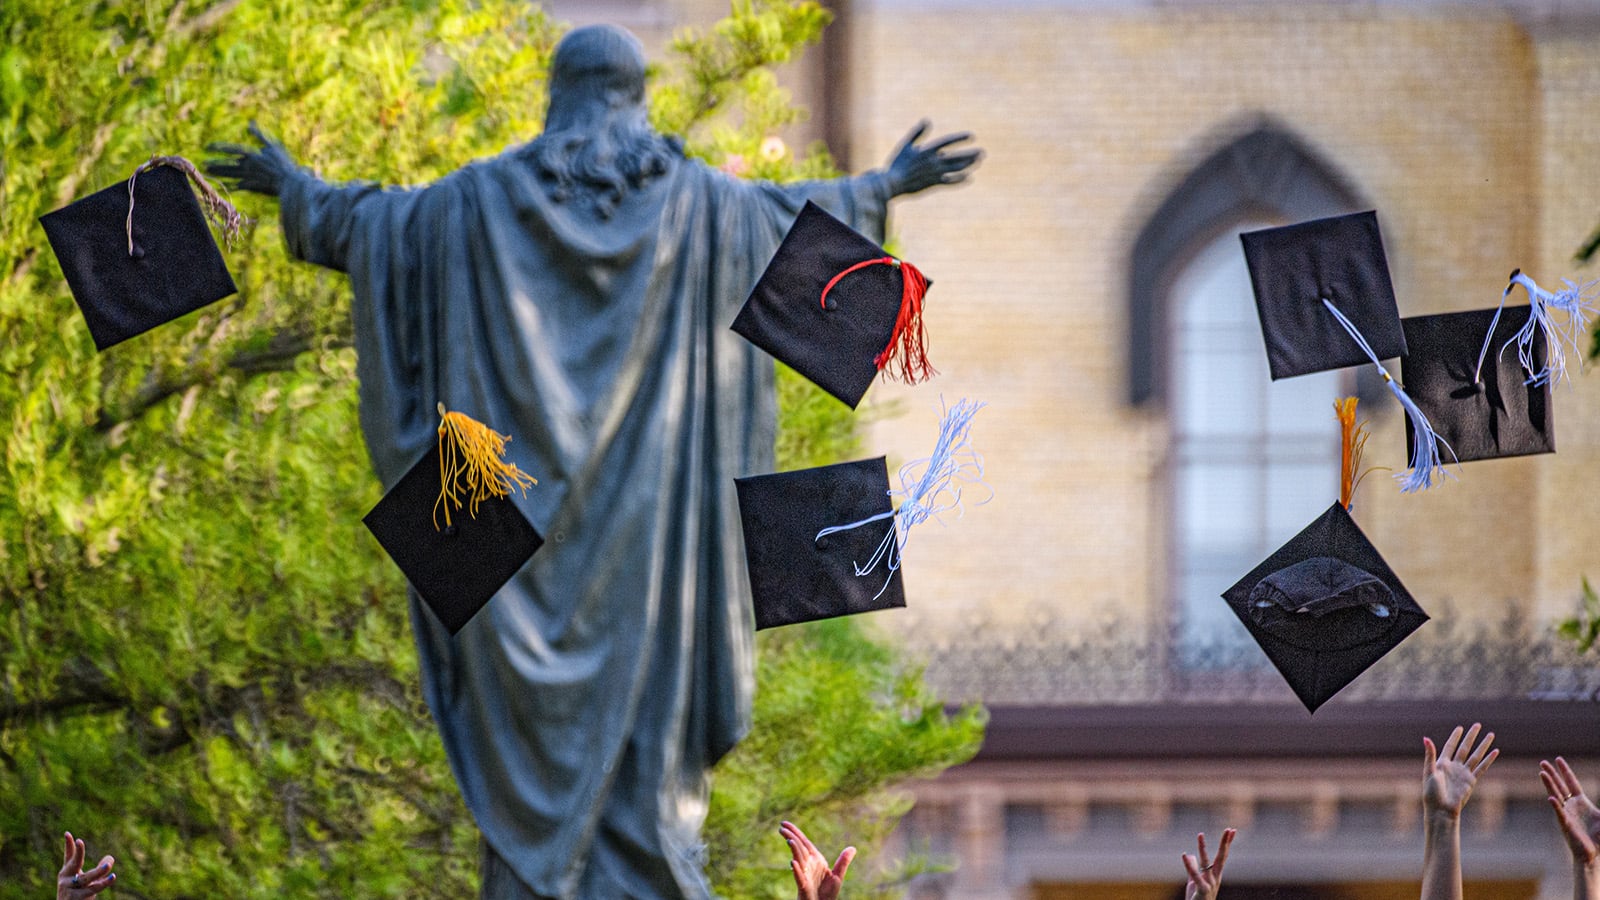 Graduates throwing caps into the air.